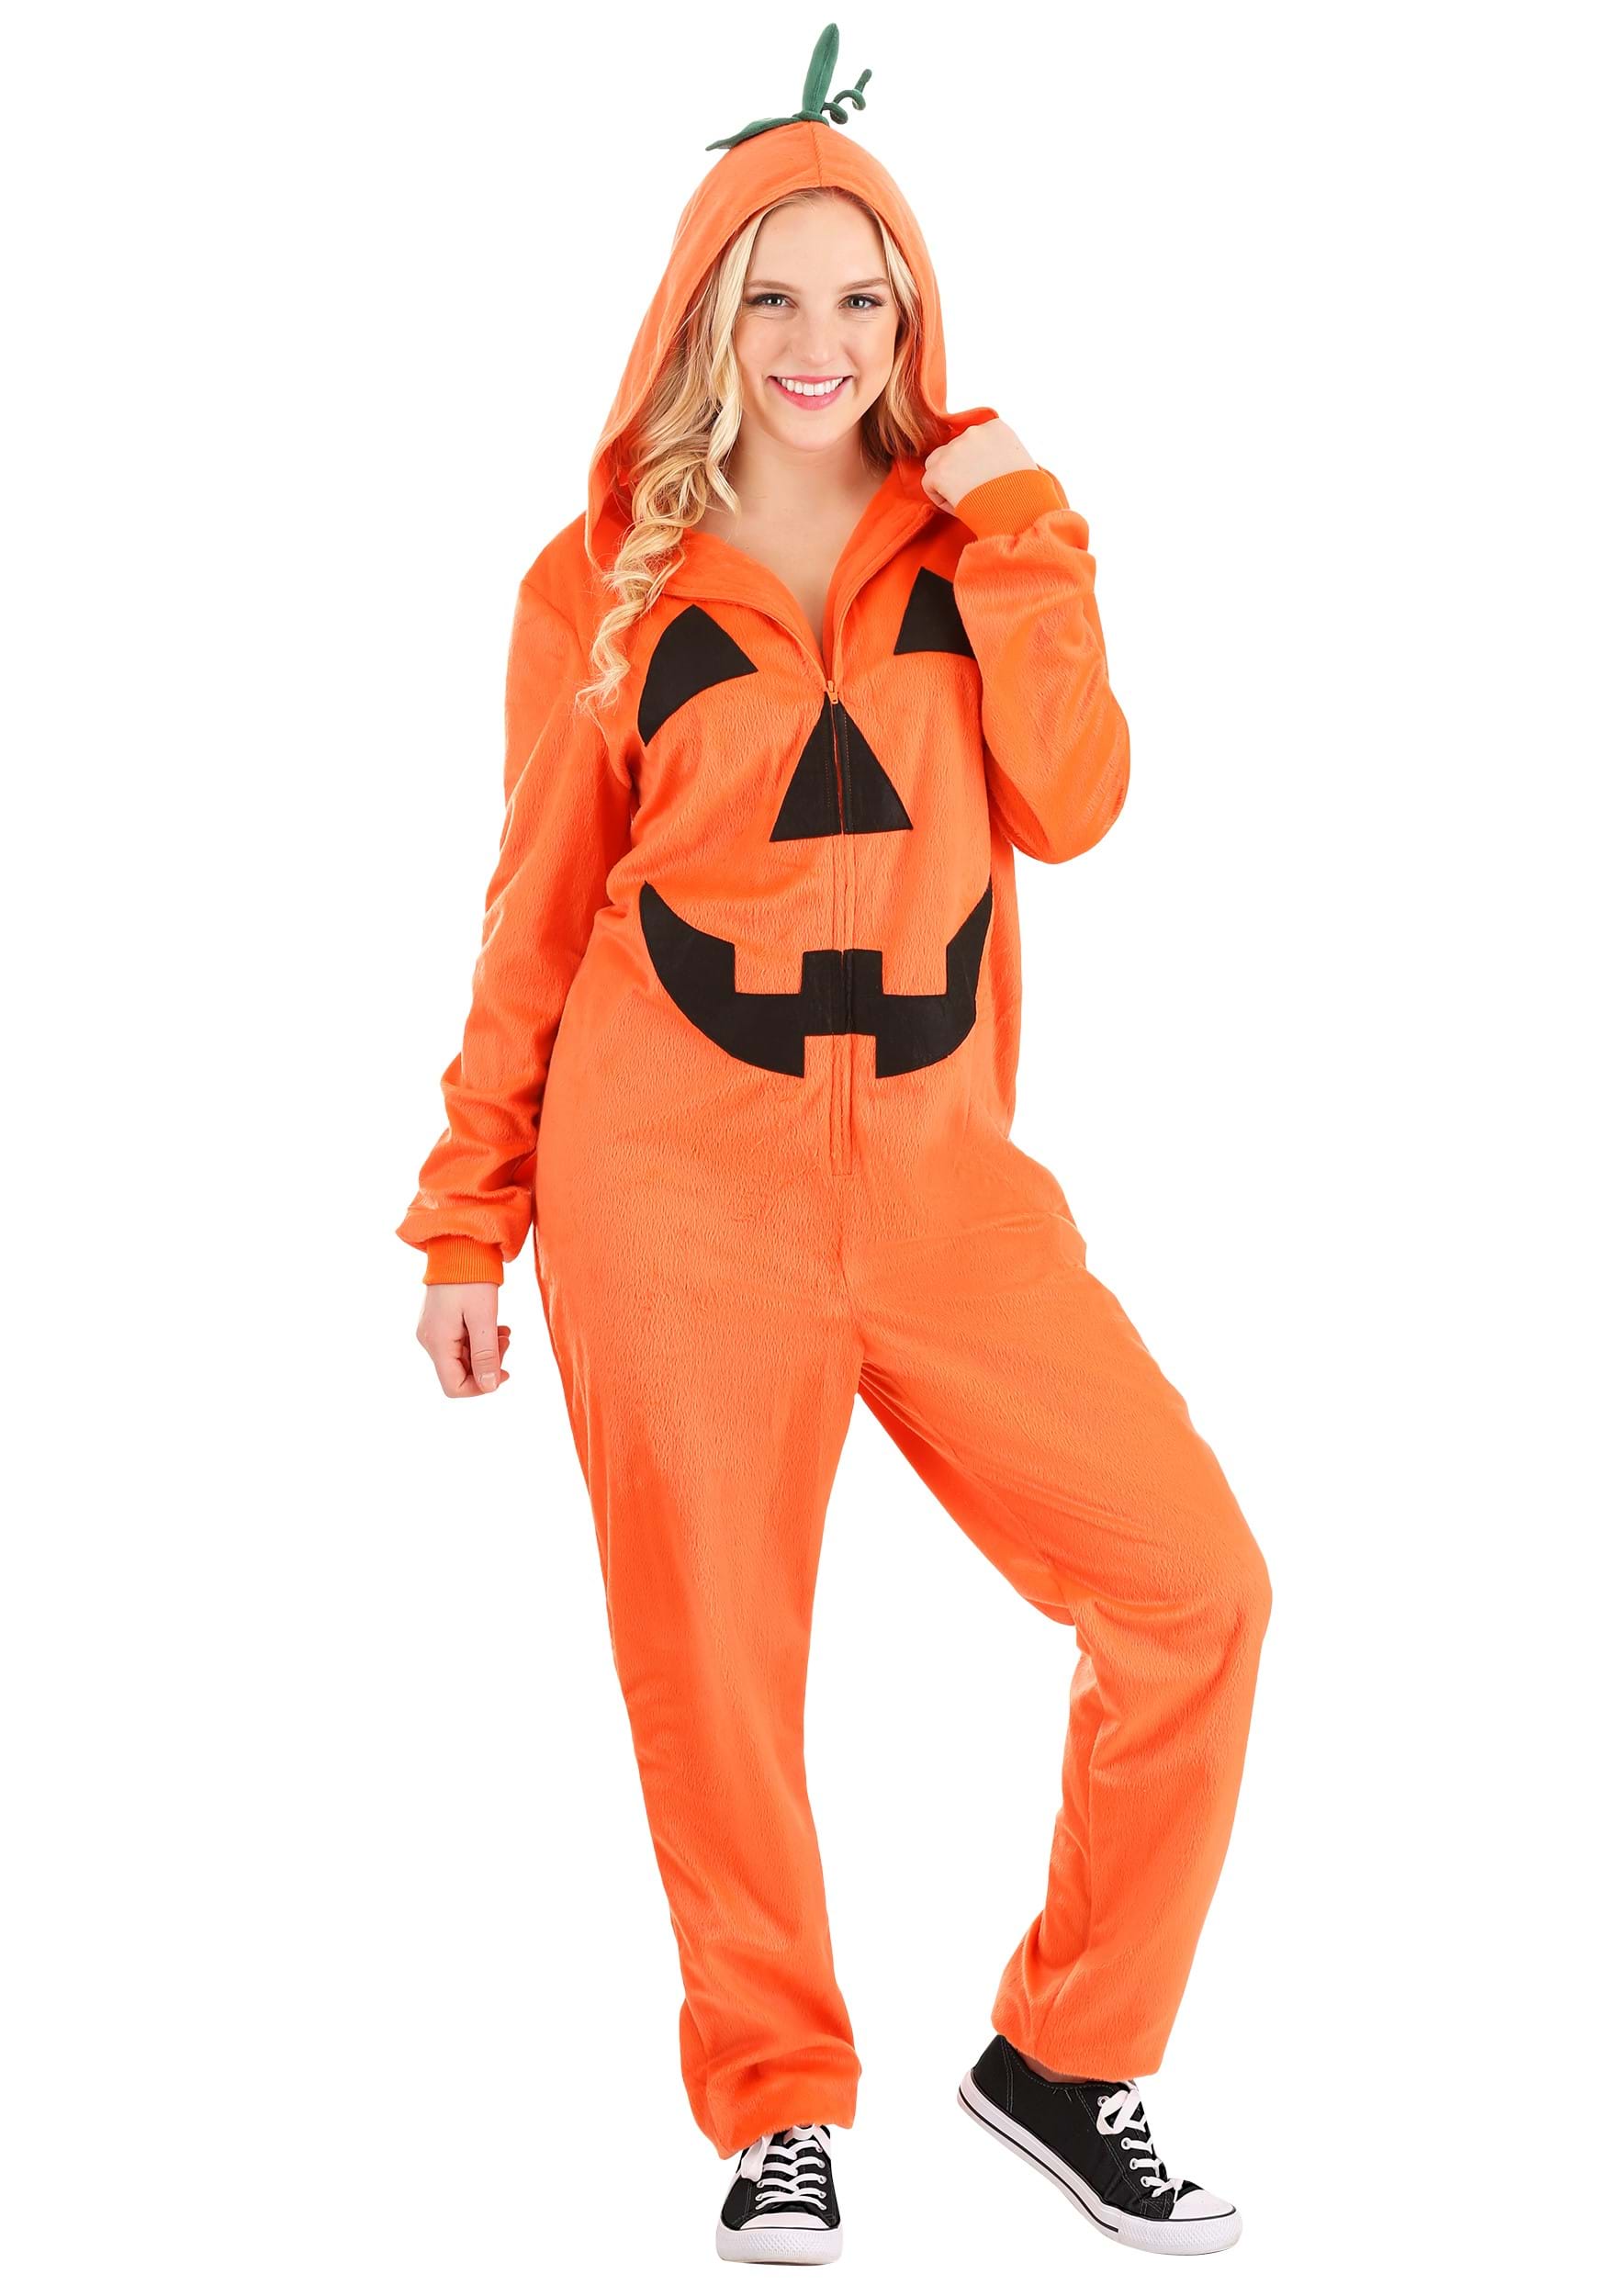 Adult Jumpsuit Pumpkin Costume